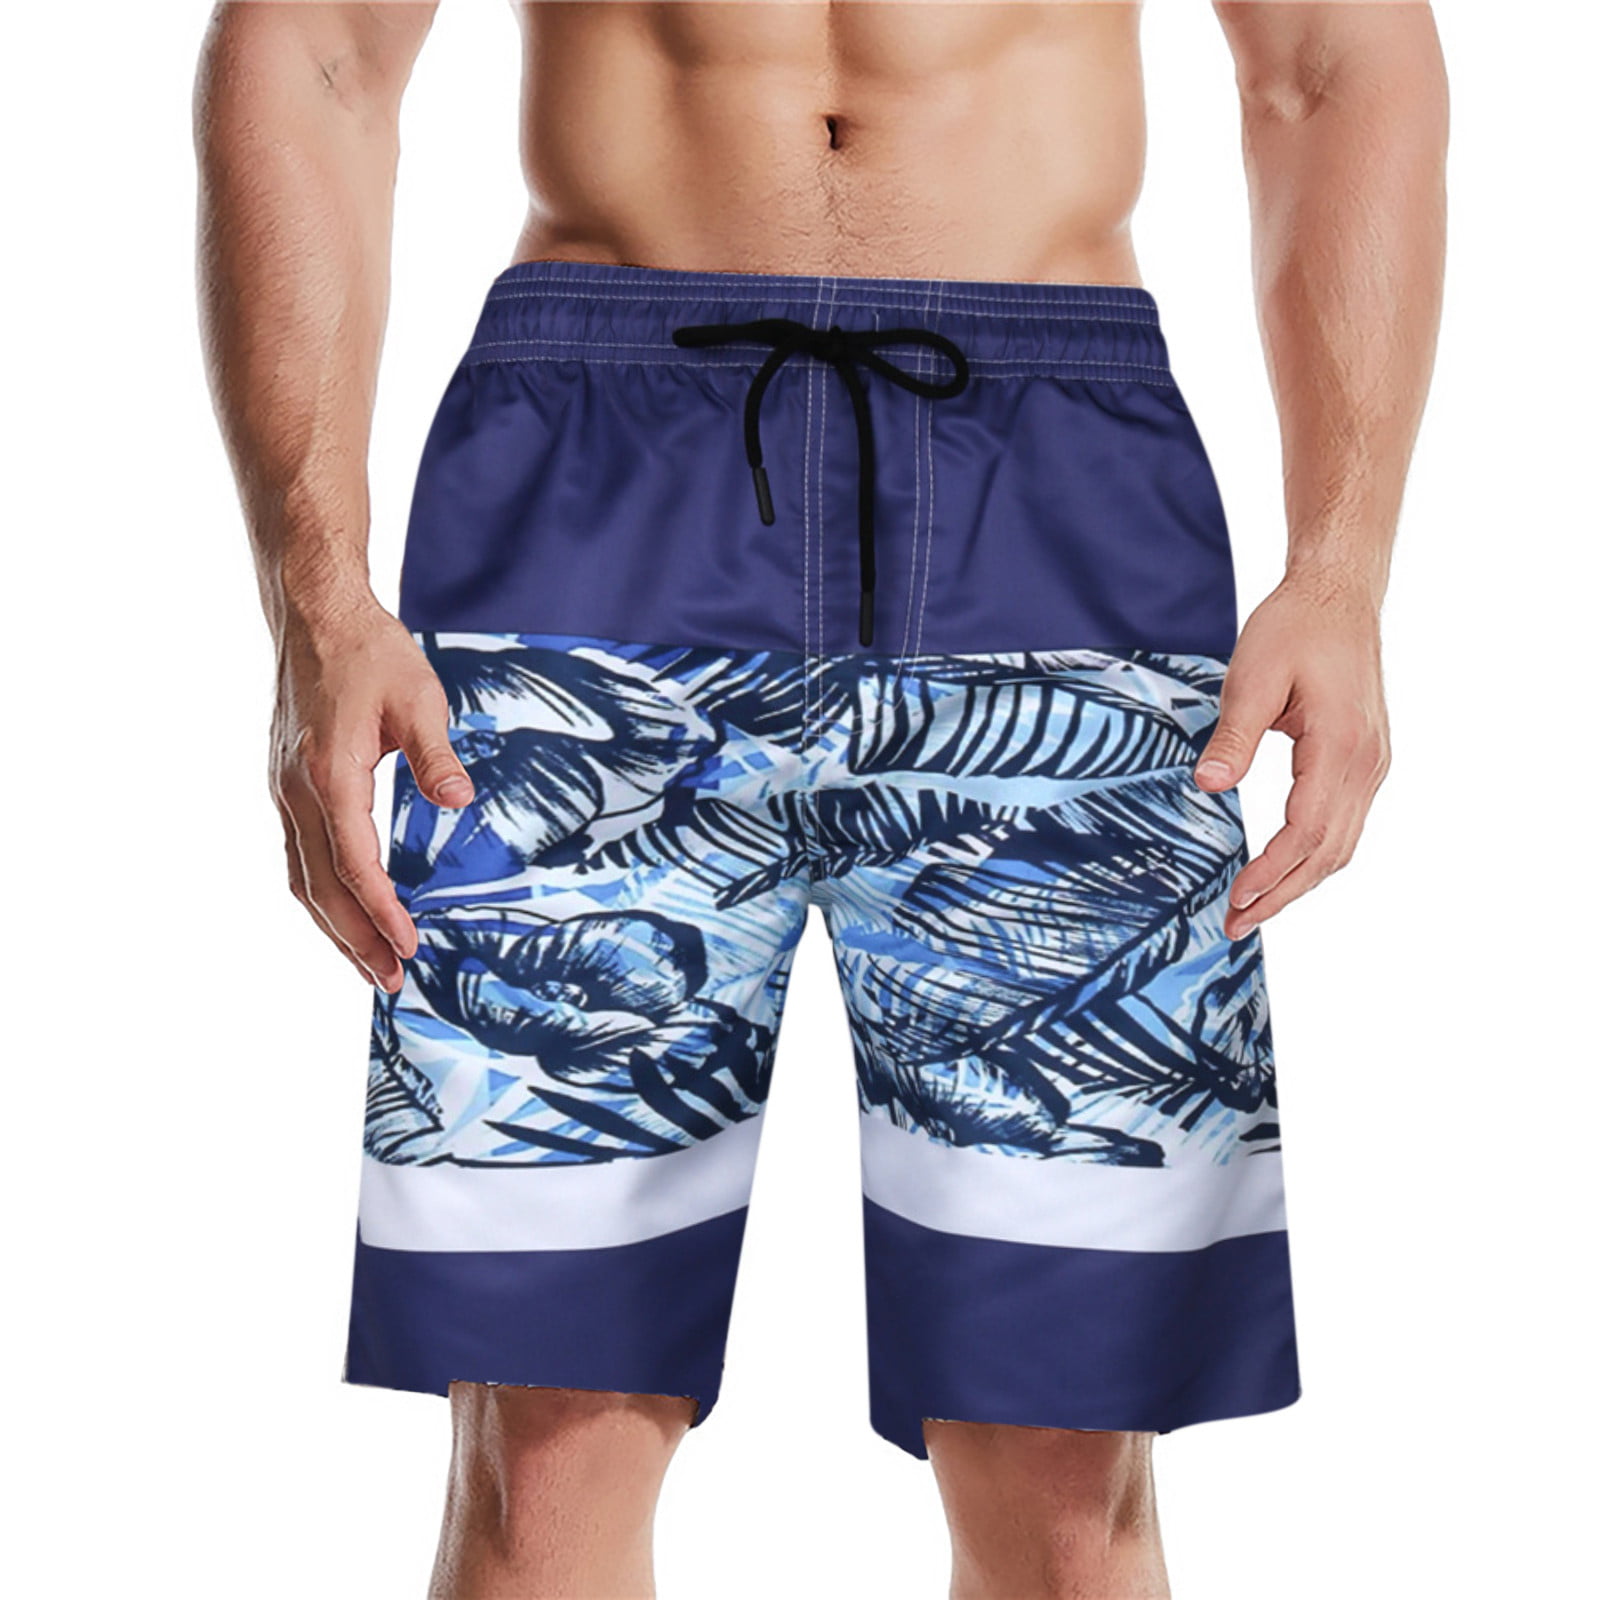 MILANKERR Men's Swim Trunks Stretch Beach Quick Dry Shorts 